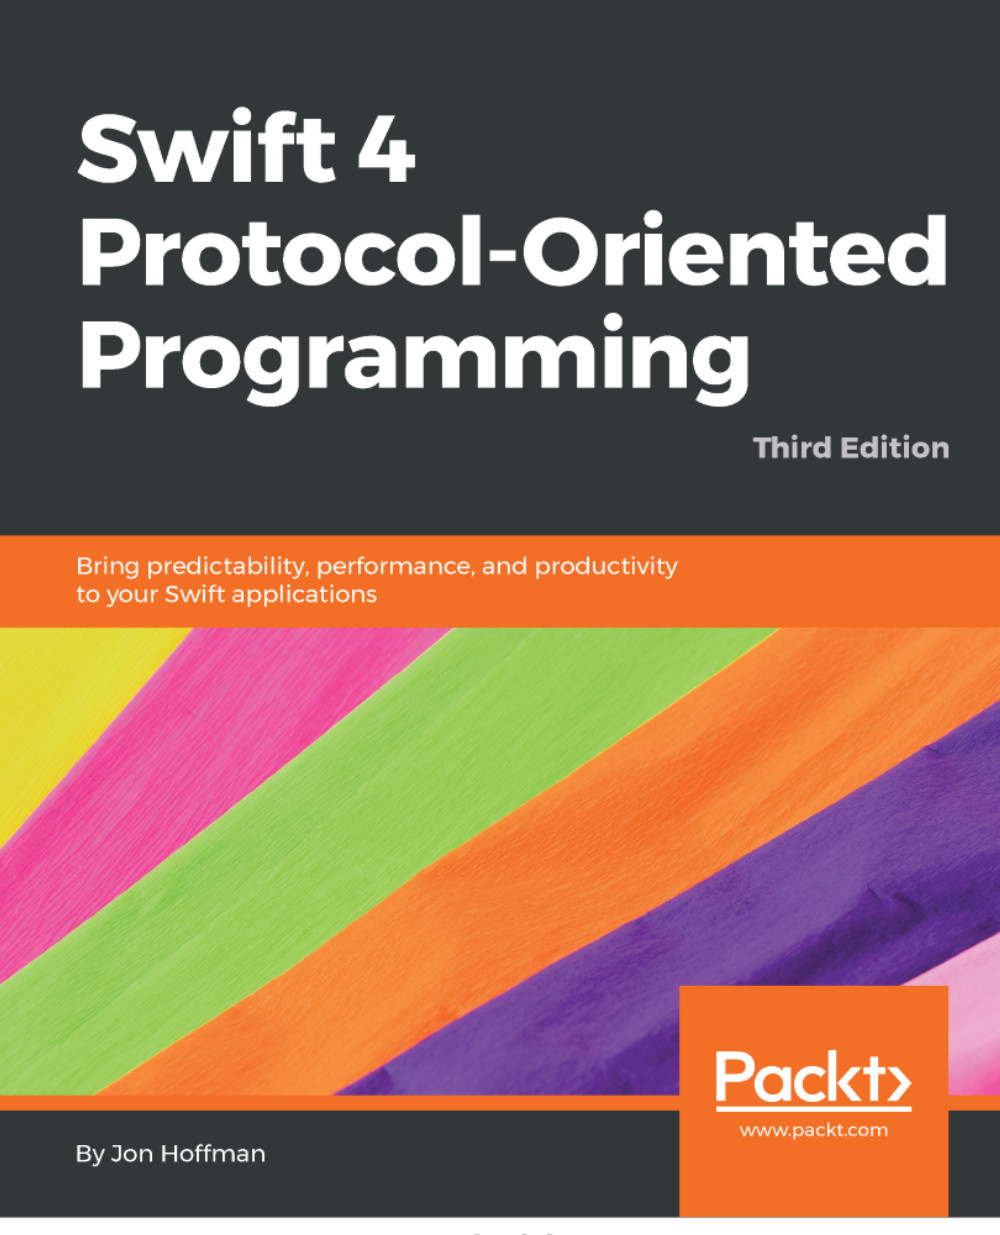 Swift 4 Protocol-Oriented Programming